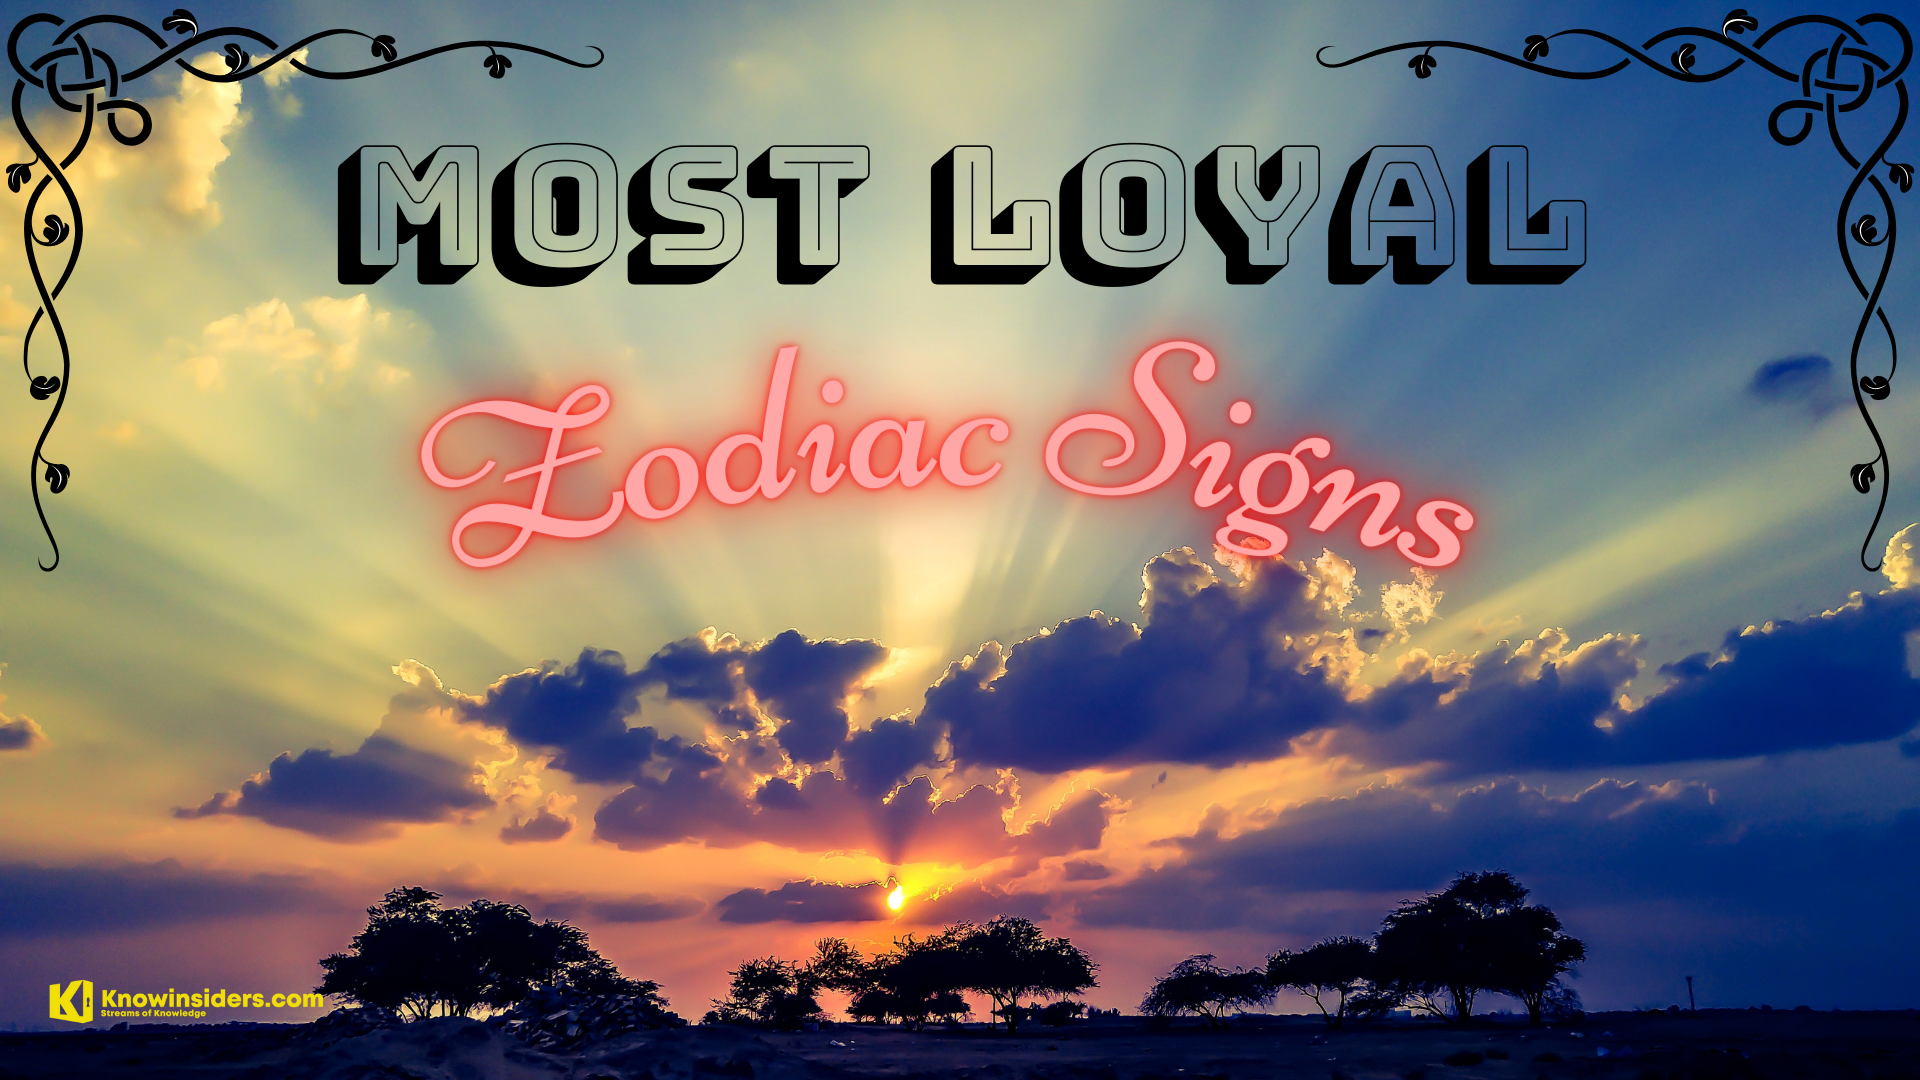 Most Loyal Zodiac Signs. Photo: Knowinsiders.